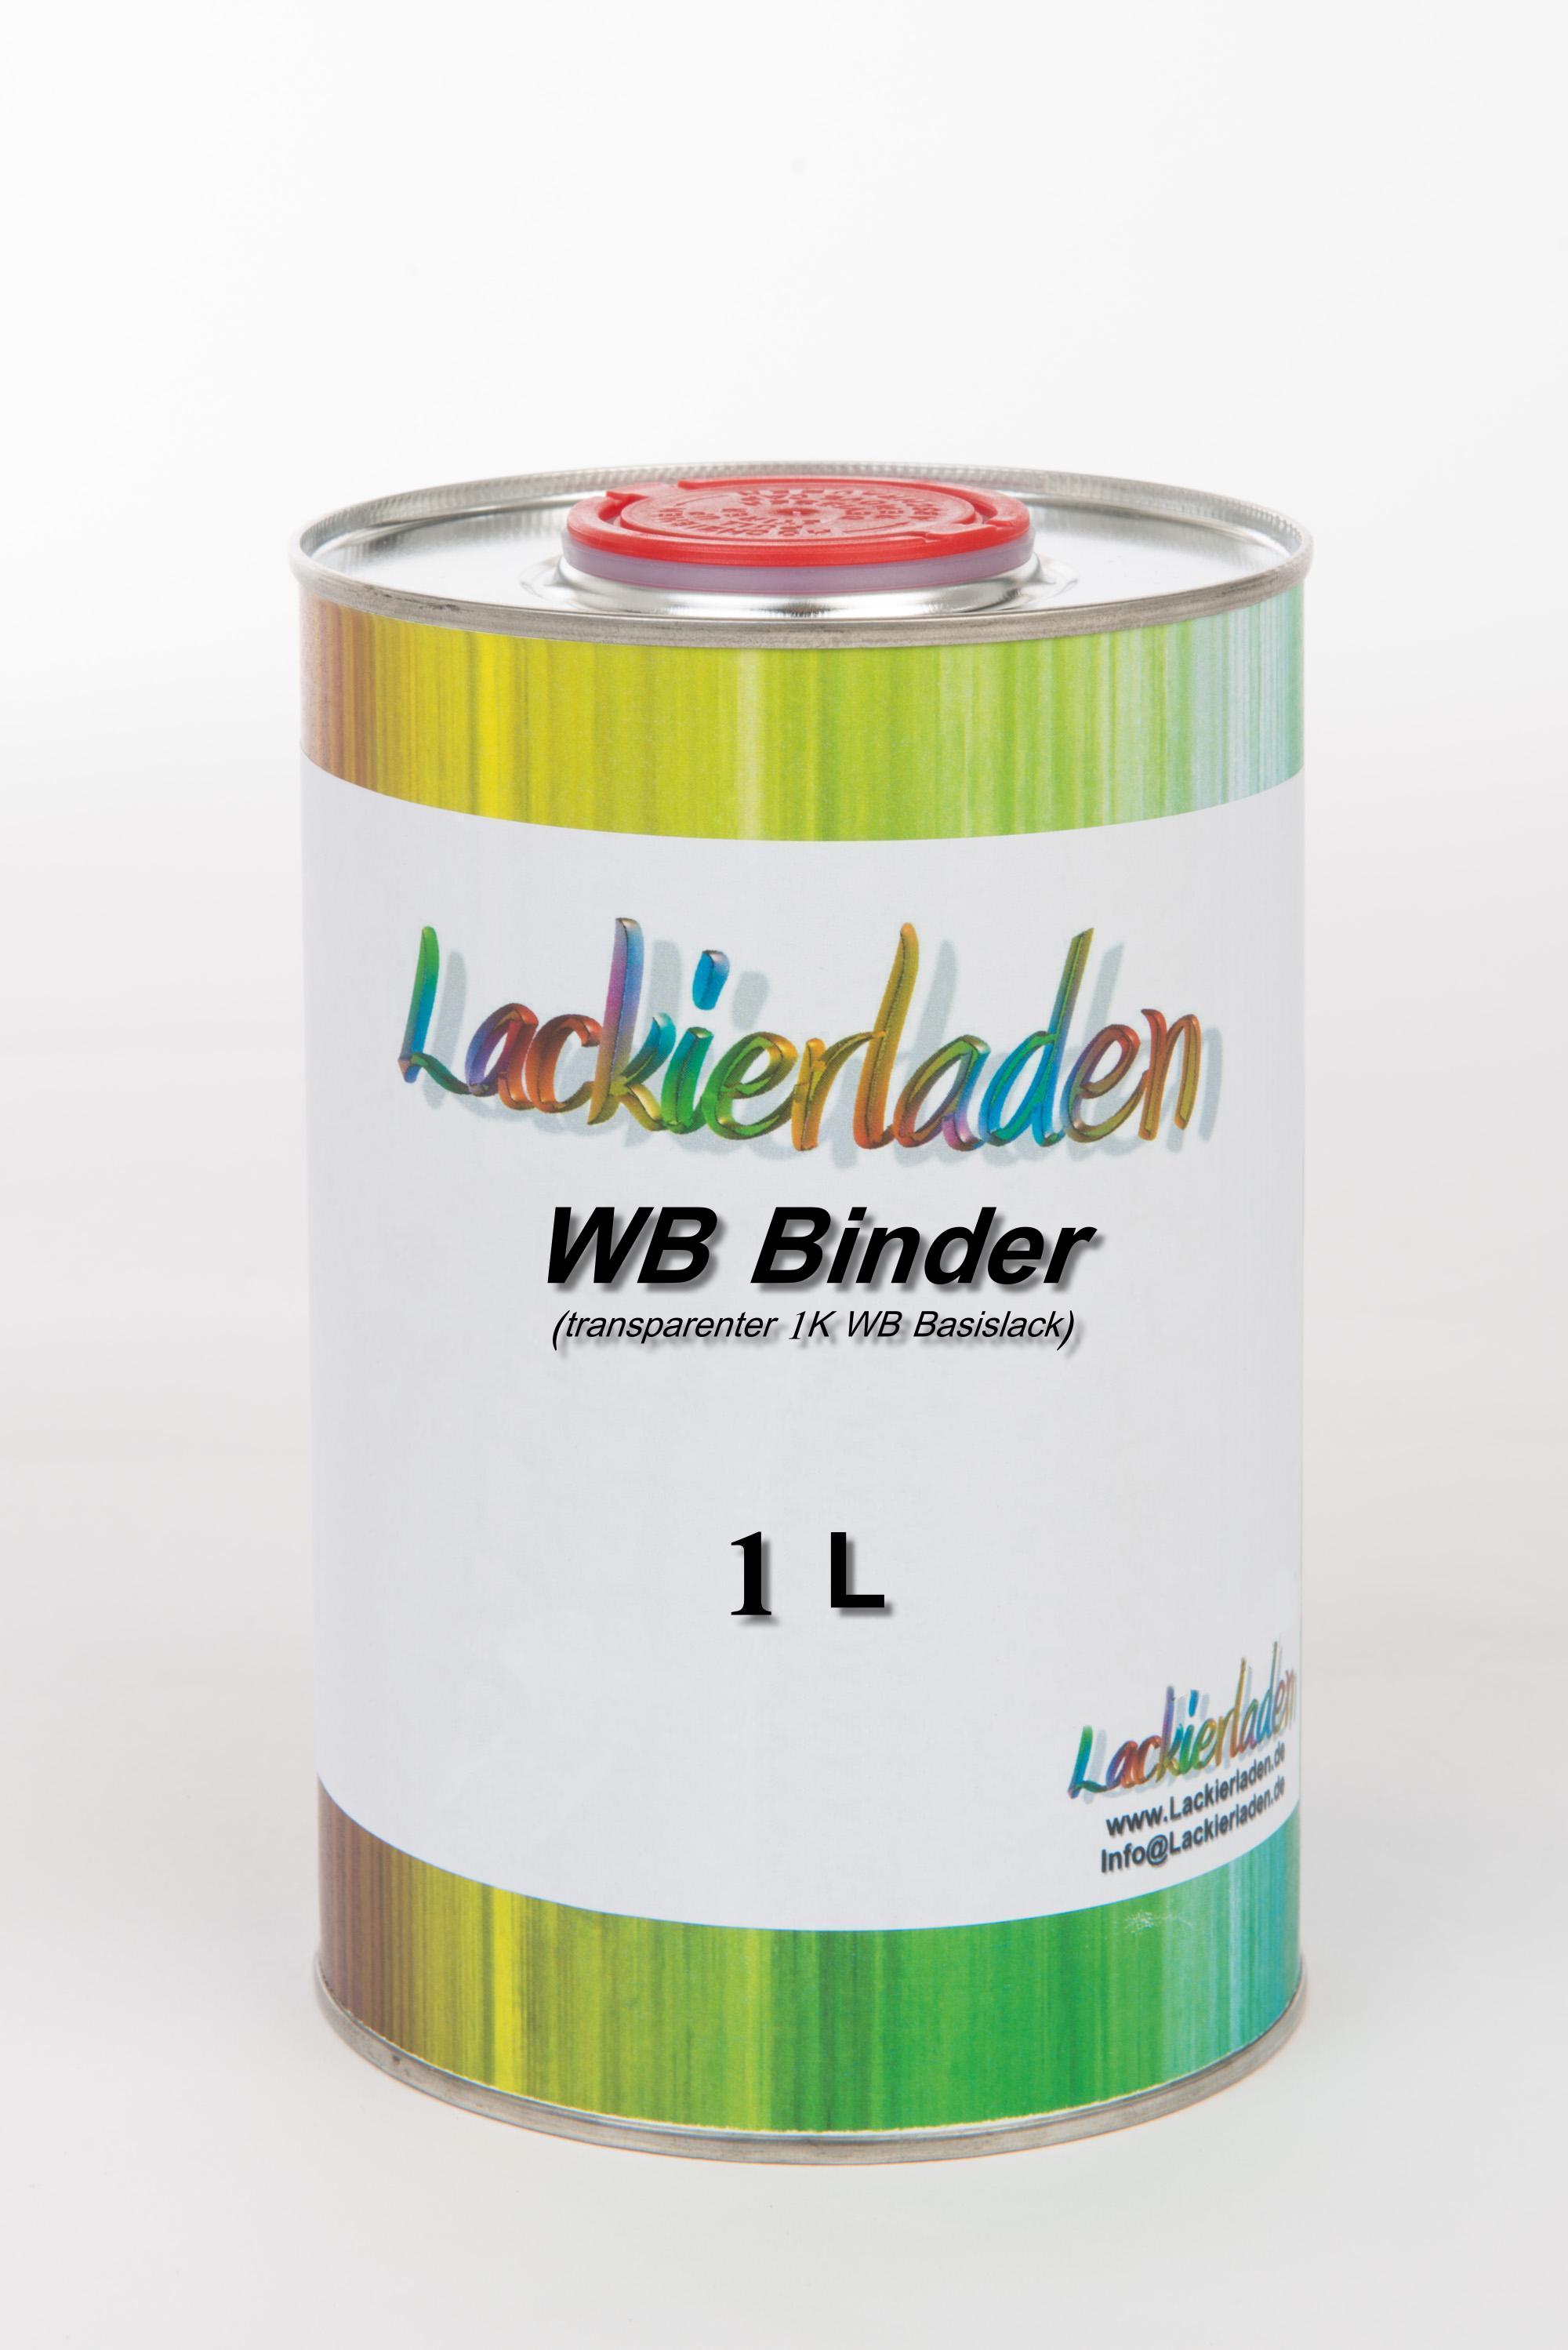 WB Binder (transparenter 1K WB Basislack) 1,0 L | farblos wasserbasis Lackzusatz 1L